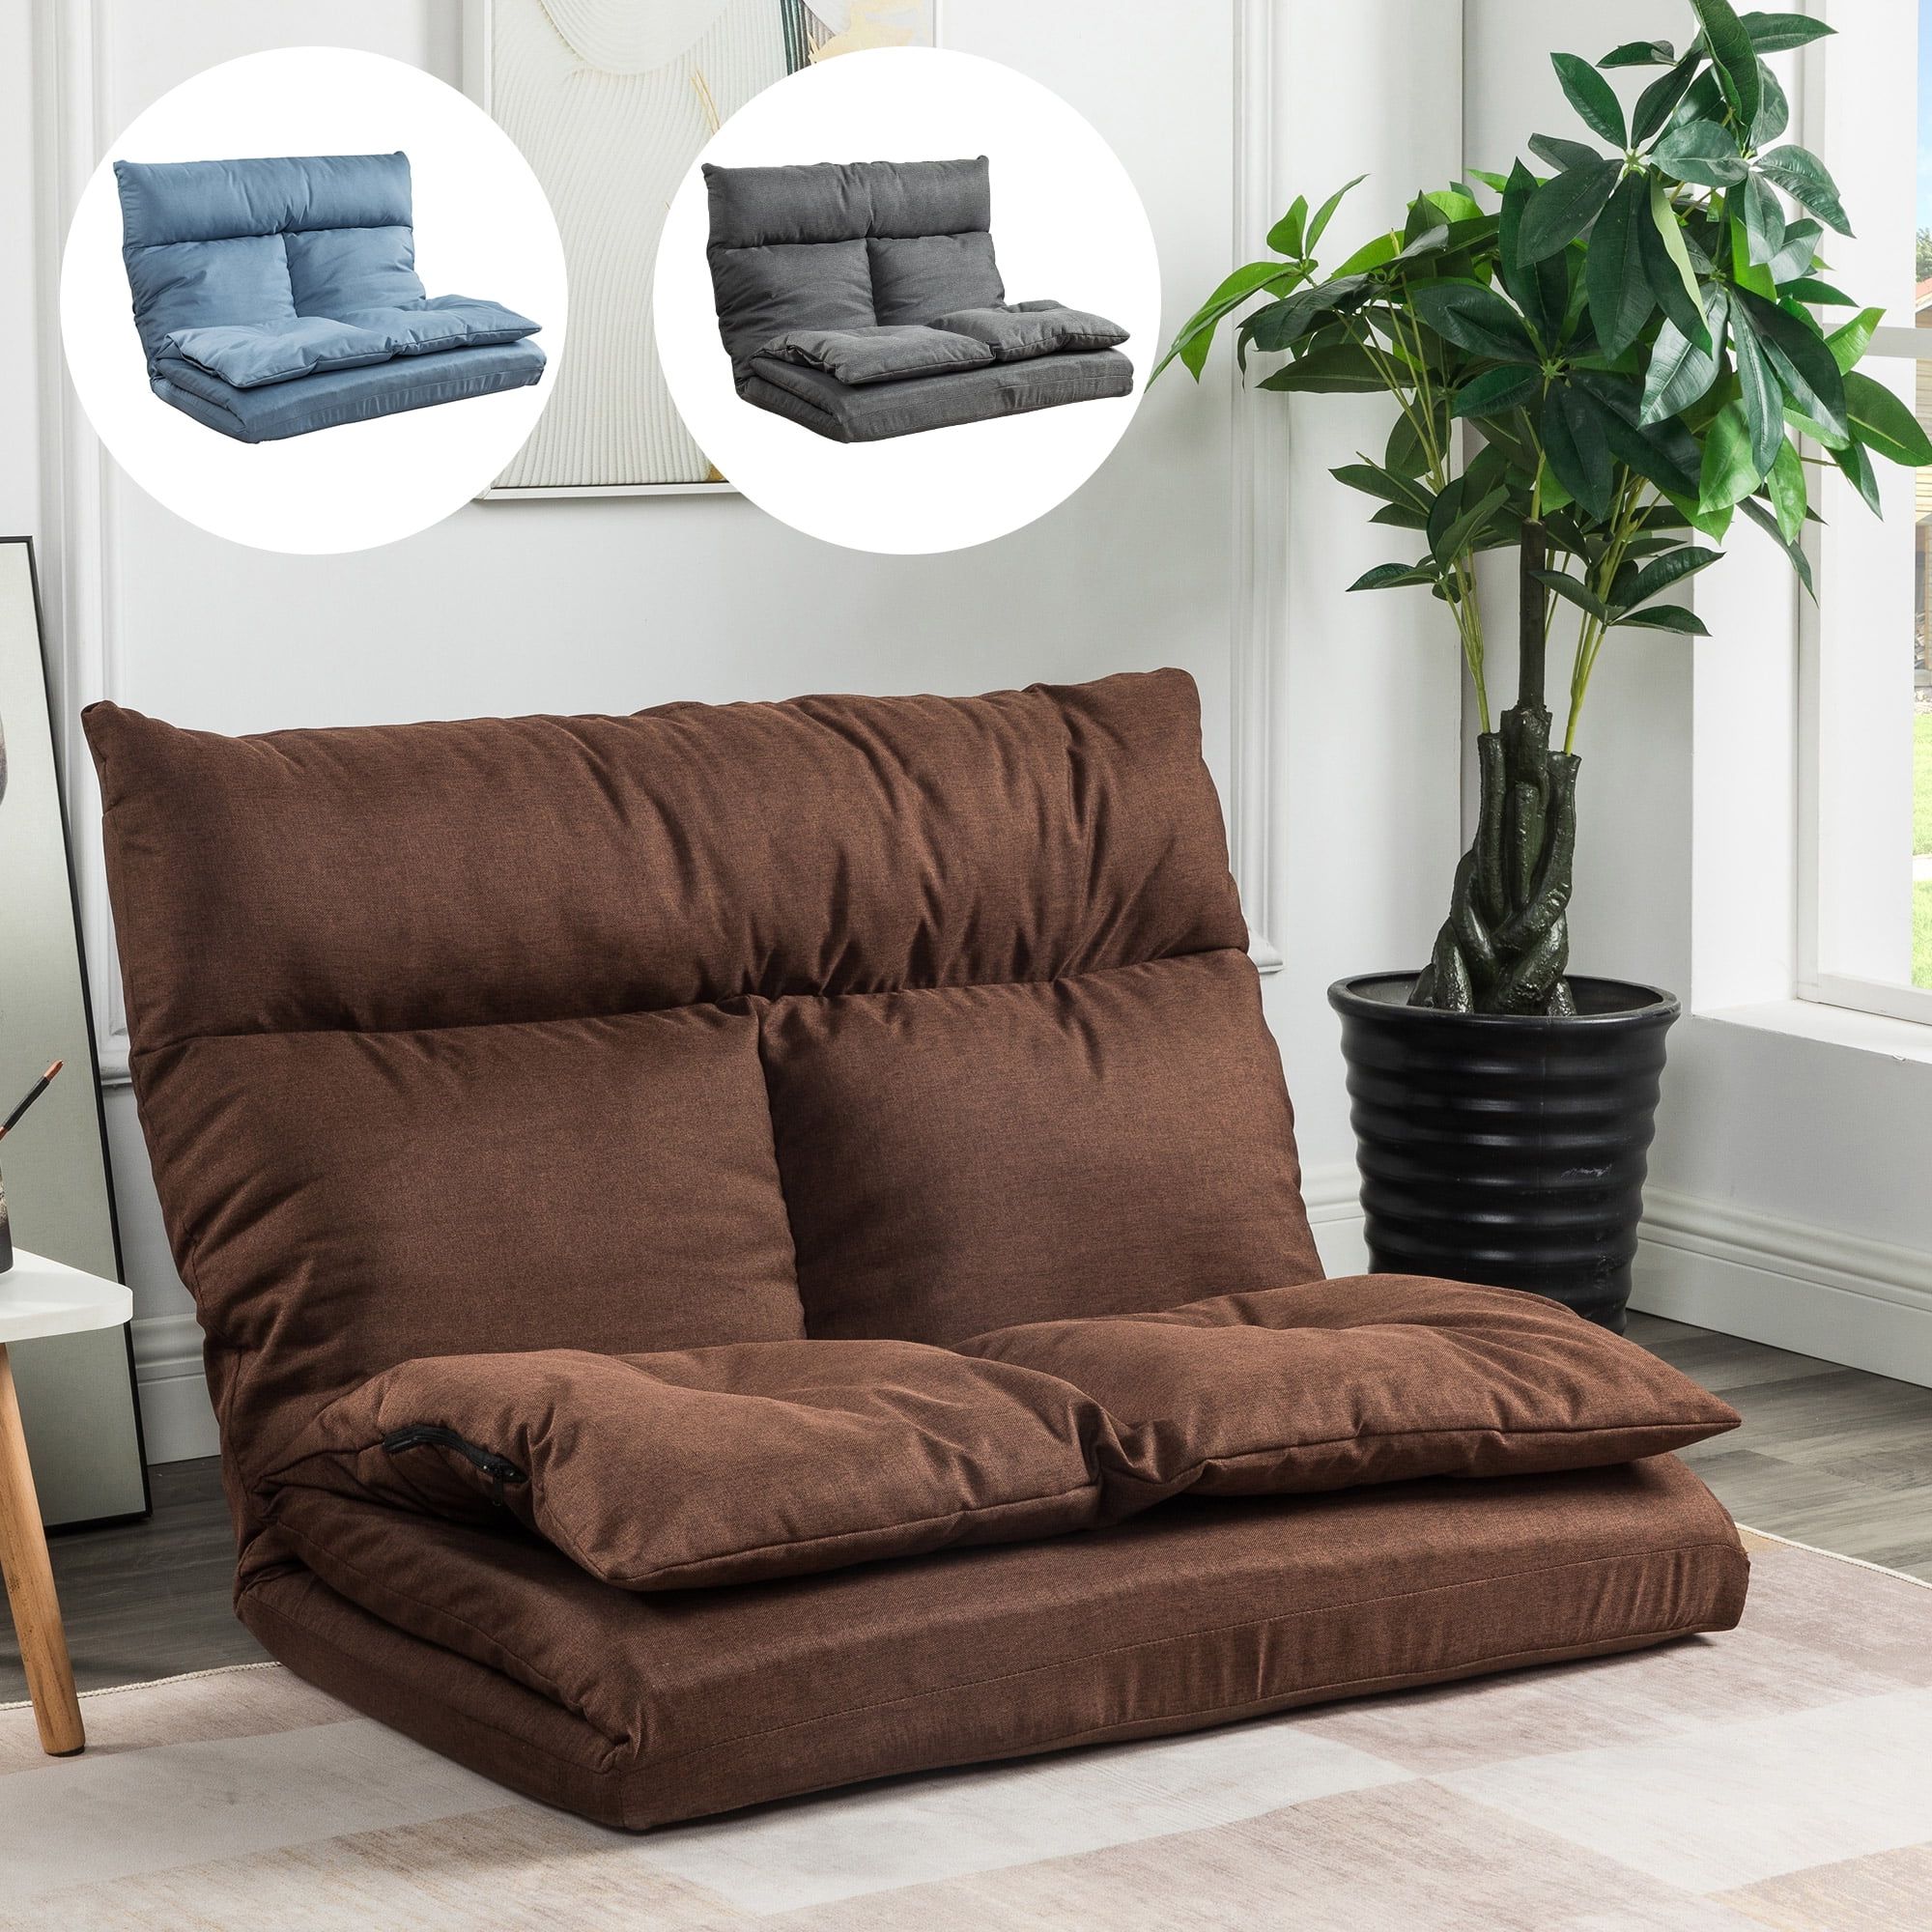 Floor Sofa, Folding Leisure Sofa Bed Adjustable Futon Sofa, Brown Regarding 2 In 1 Foldable Sofas (View 10 of 20)